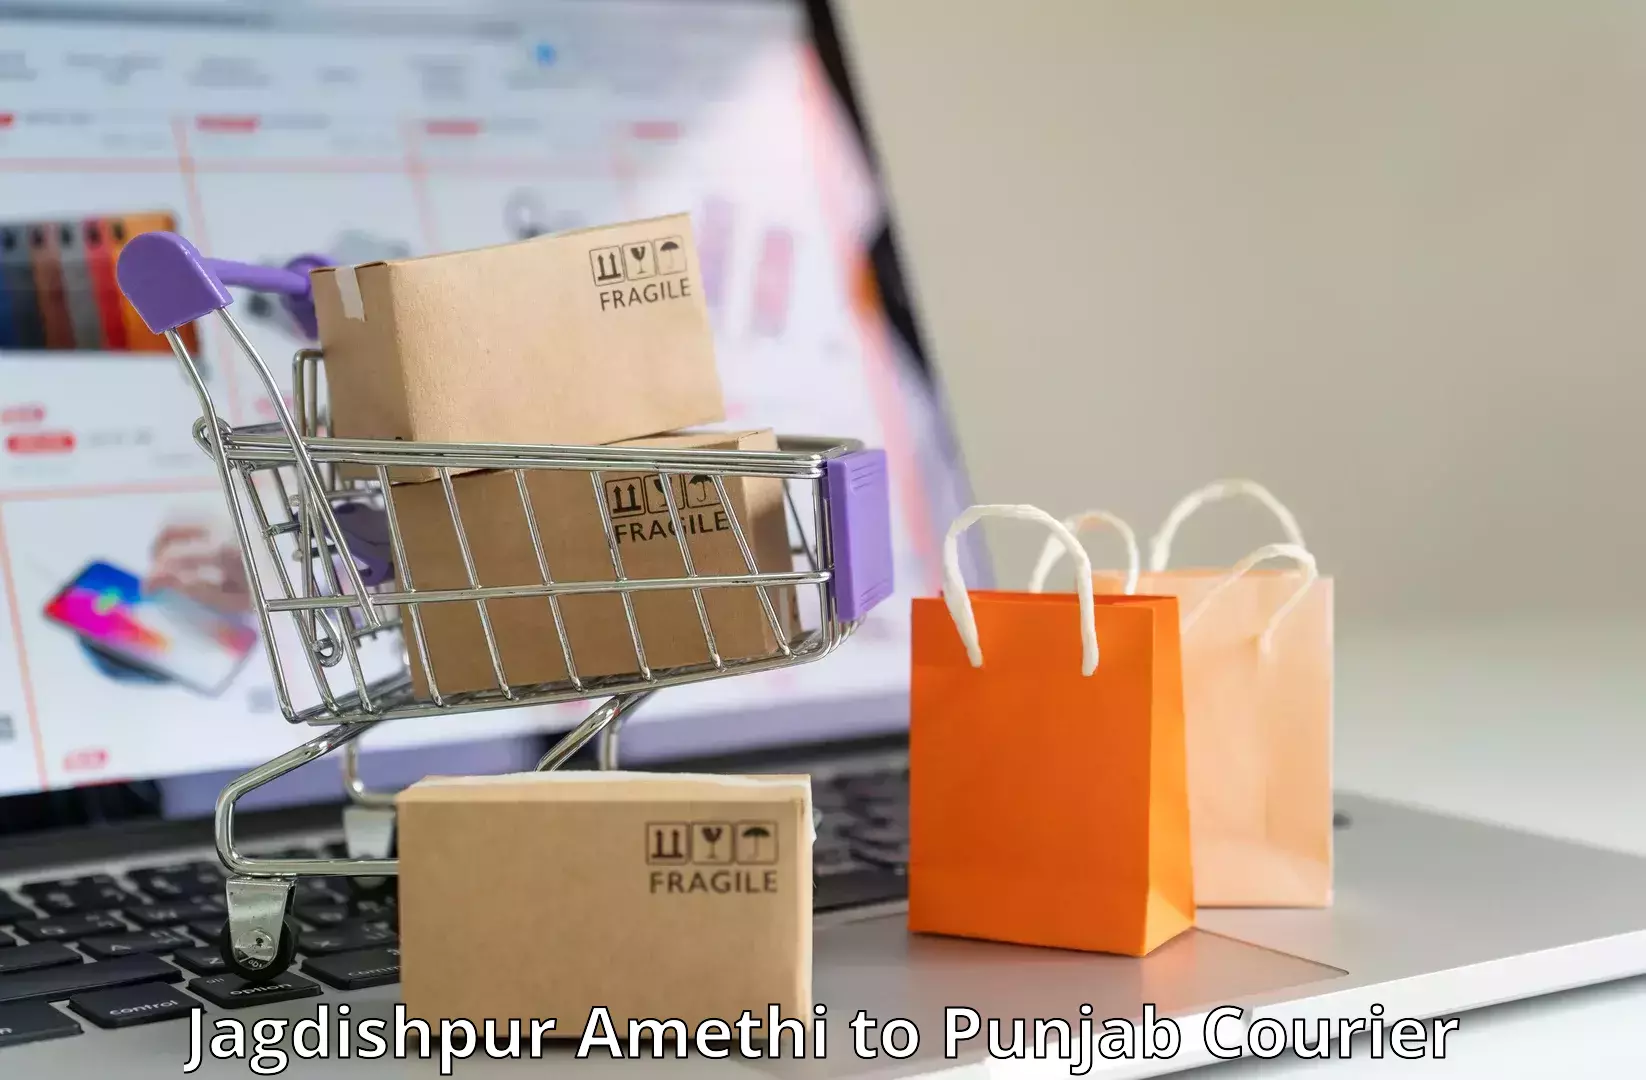 Courier tracking online Jagdishpur Amethi to Punjab